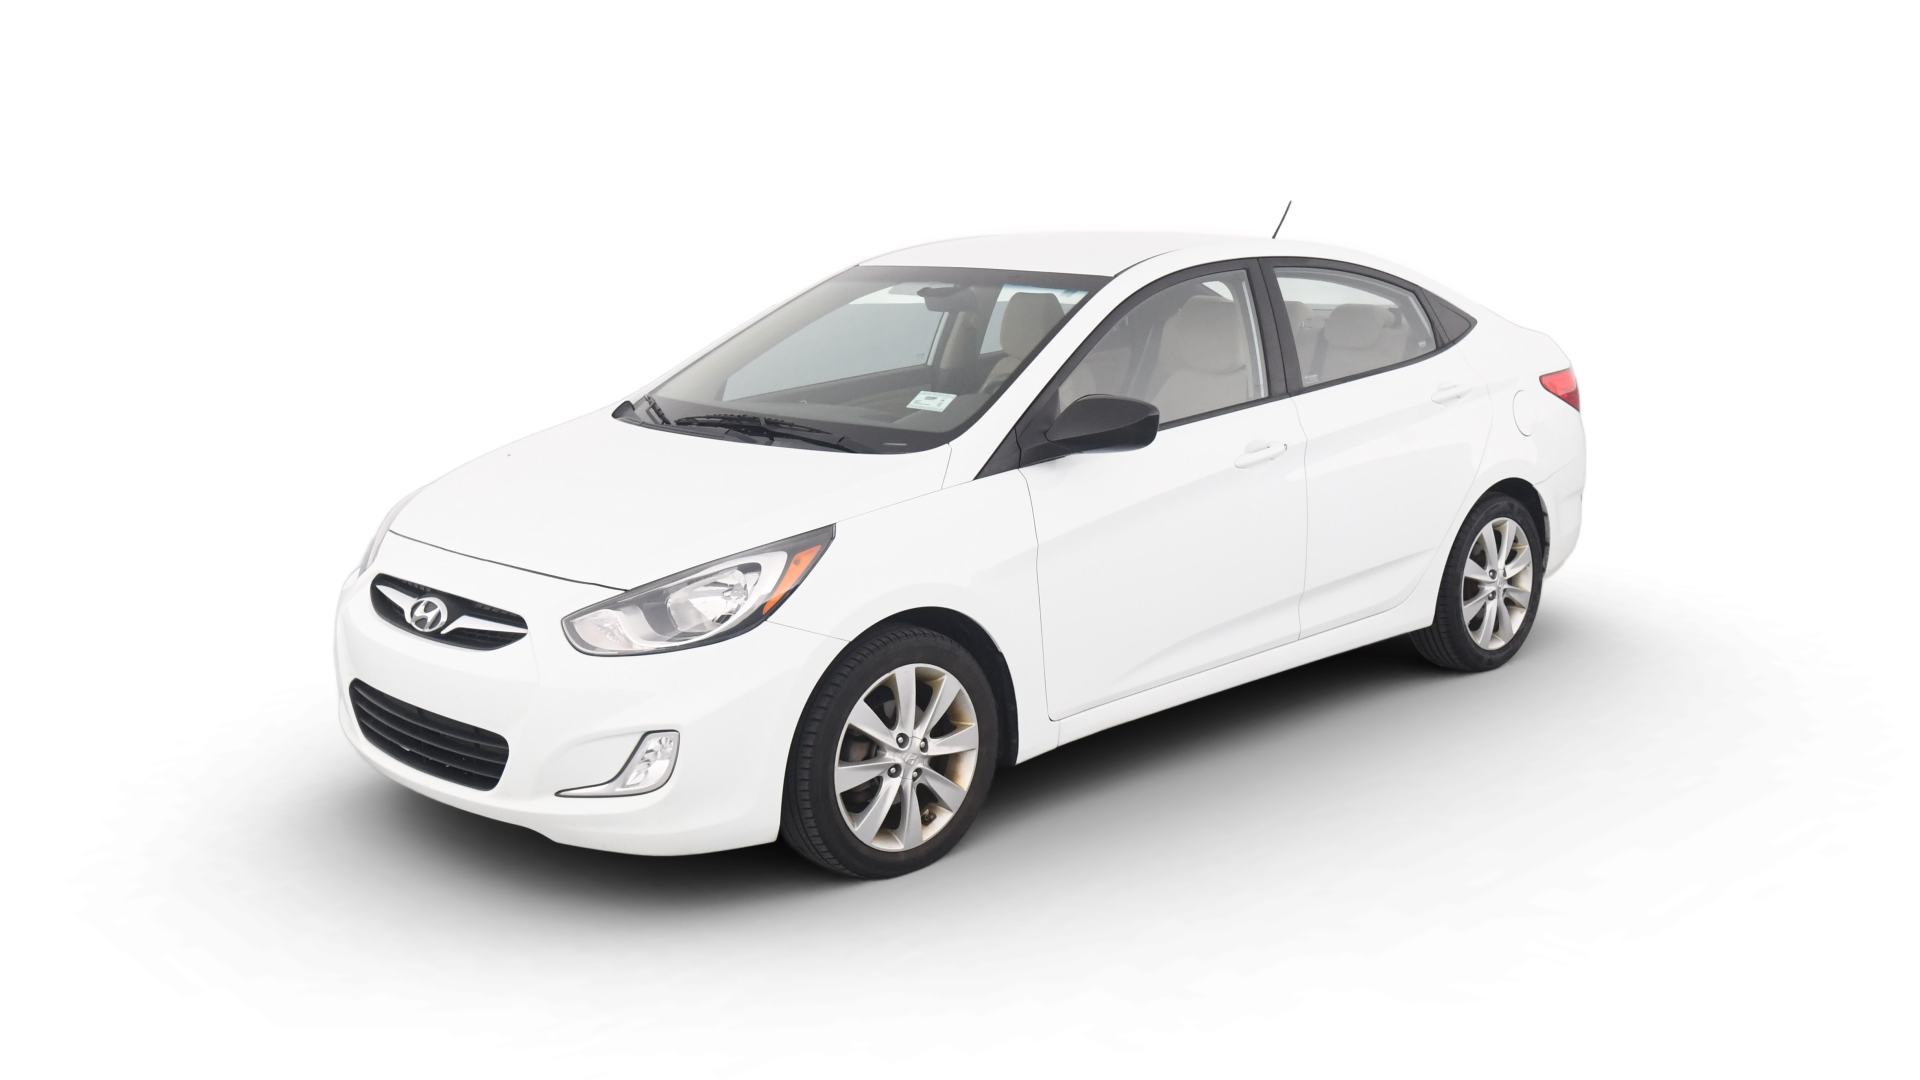 Hyundai Accent model image.